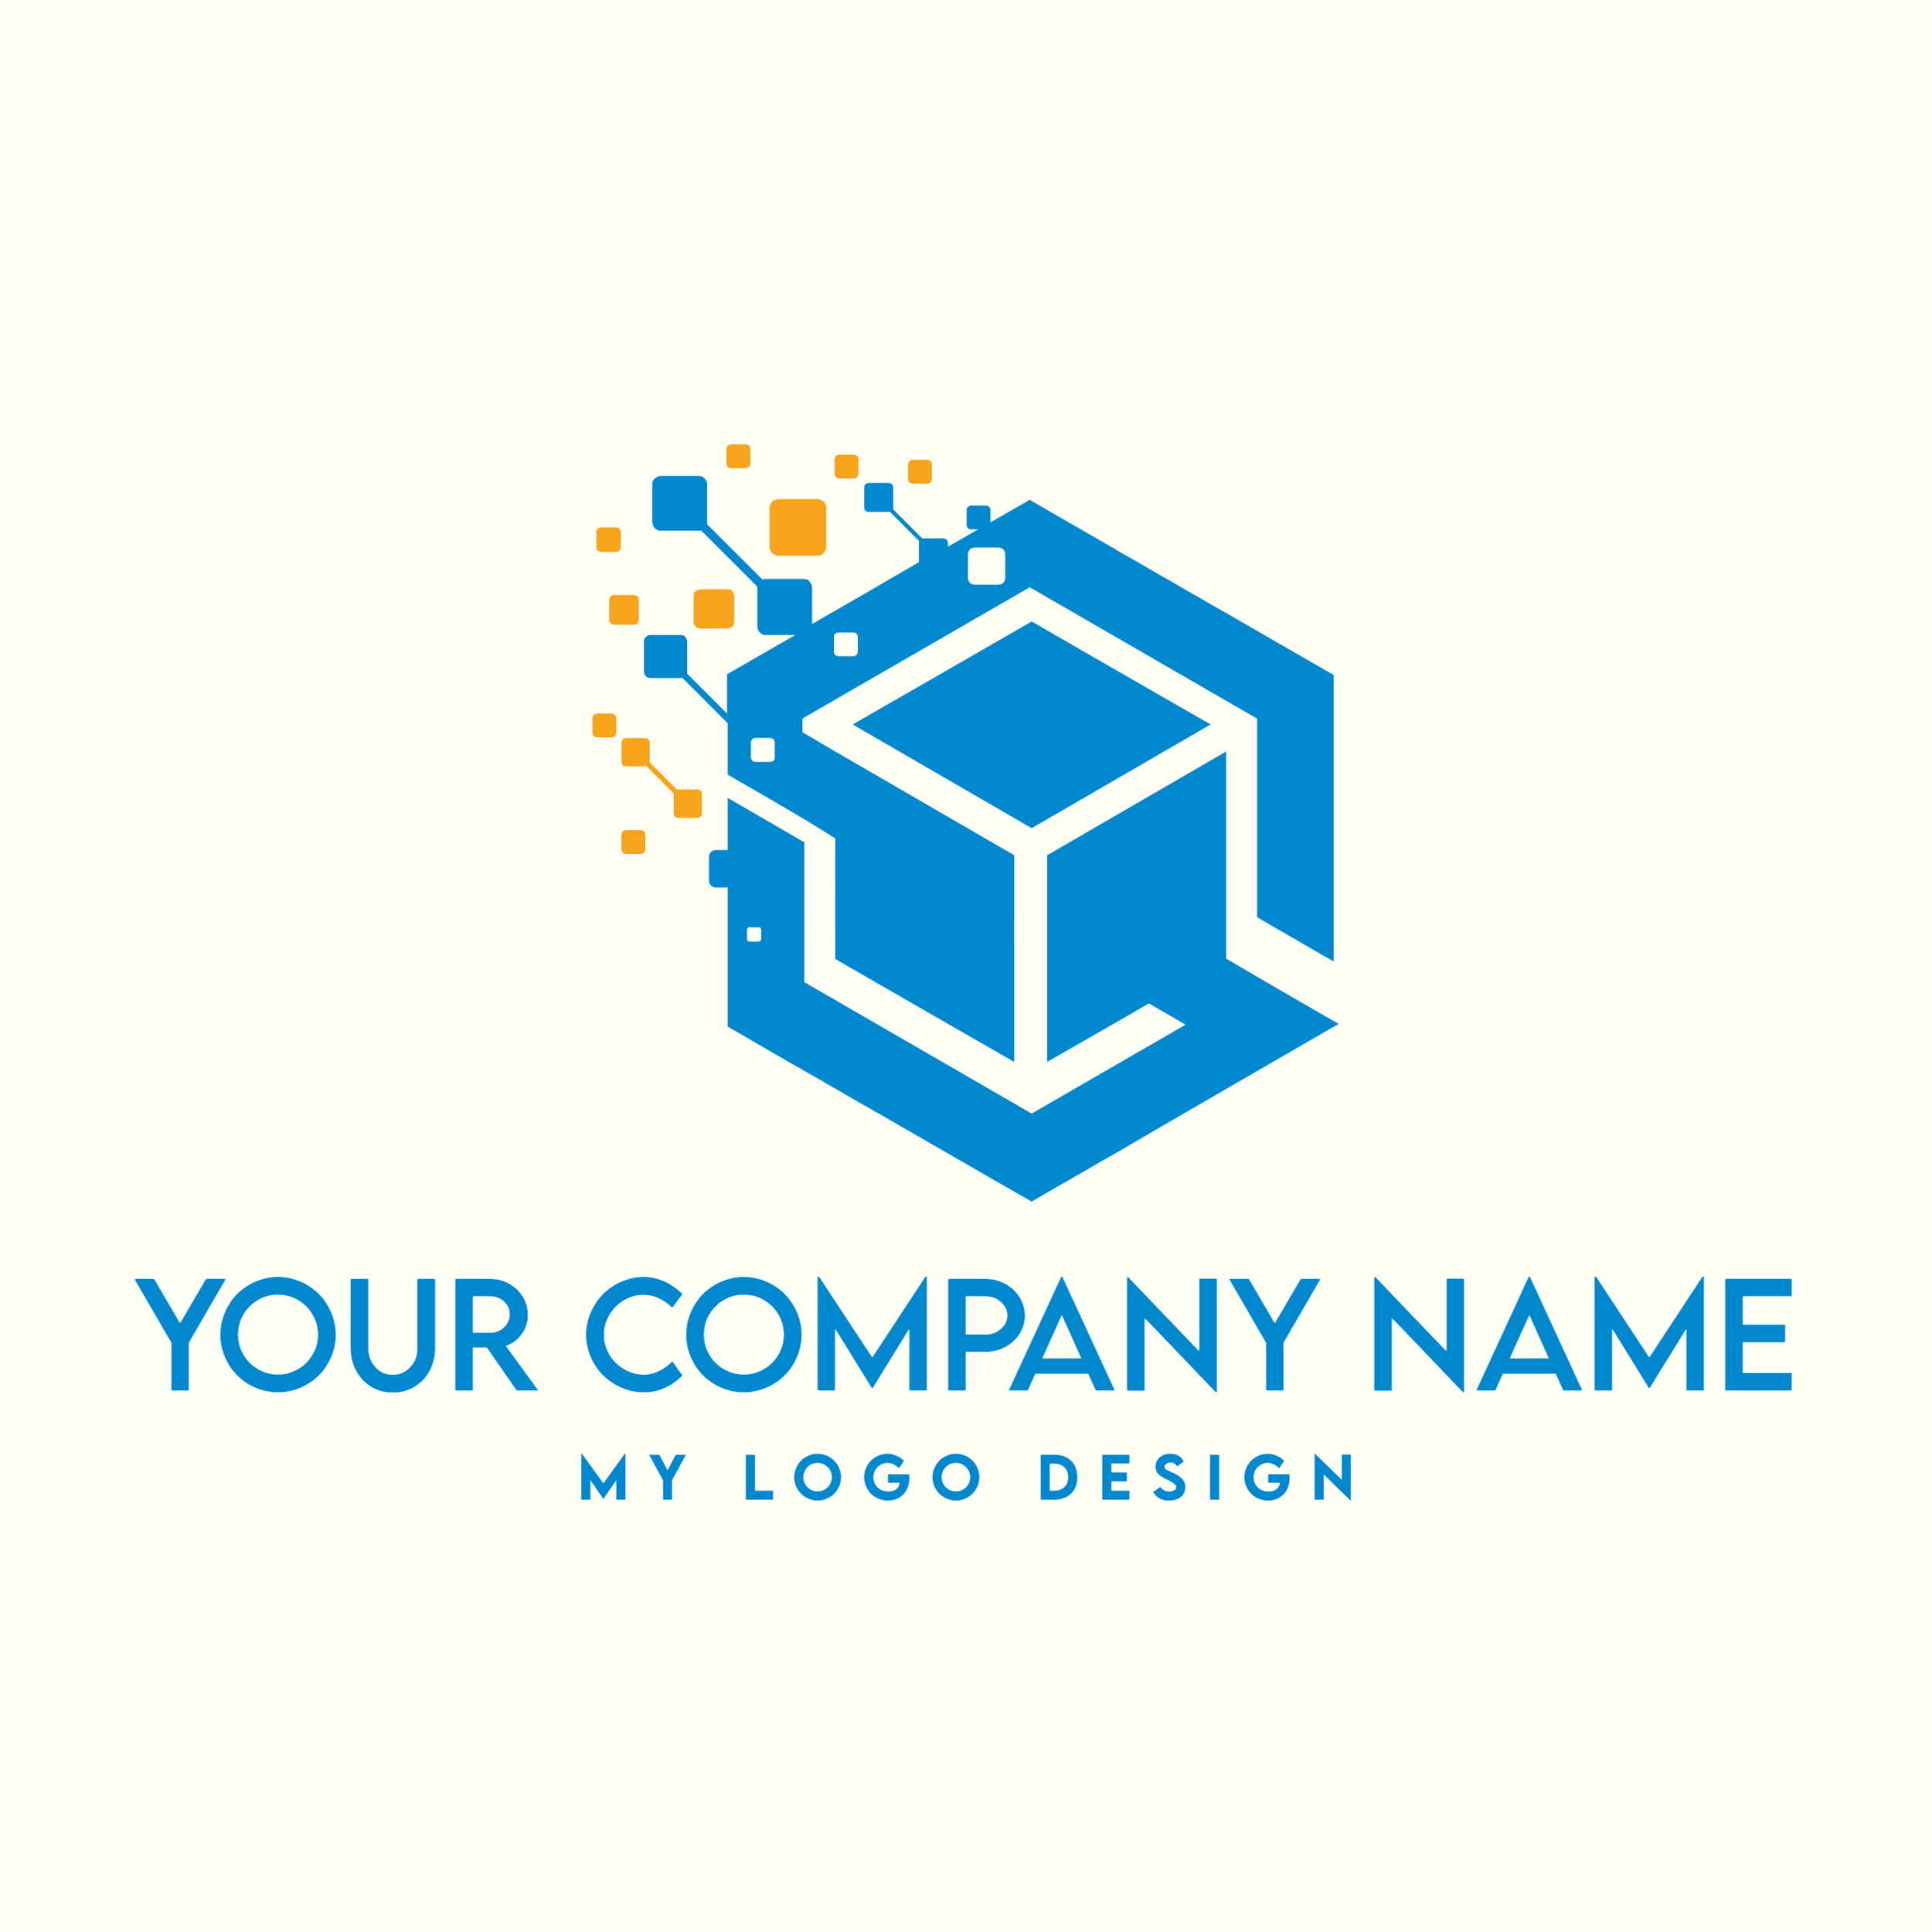 My logo design collection1